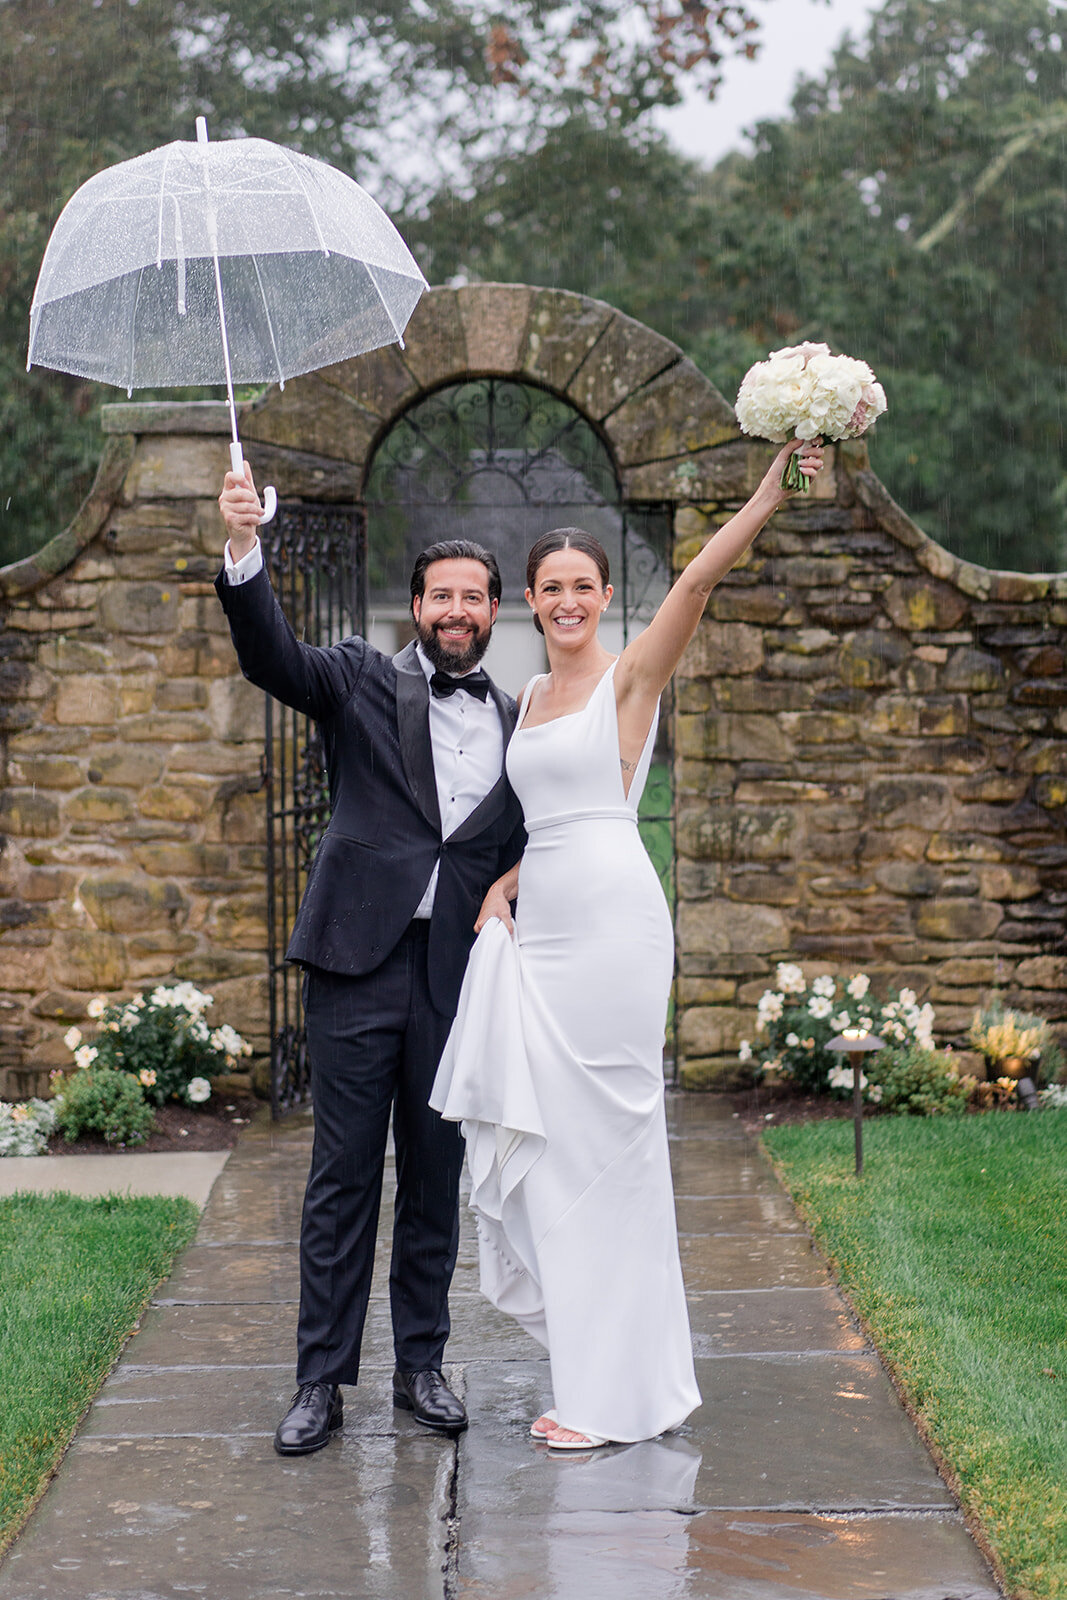 Kate-Murtaugh-Events-RI-wedding-planner-elopement-micro-wedding-intimate-celebration-Shepherds-Run-rain-umbrella-bride-groom